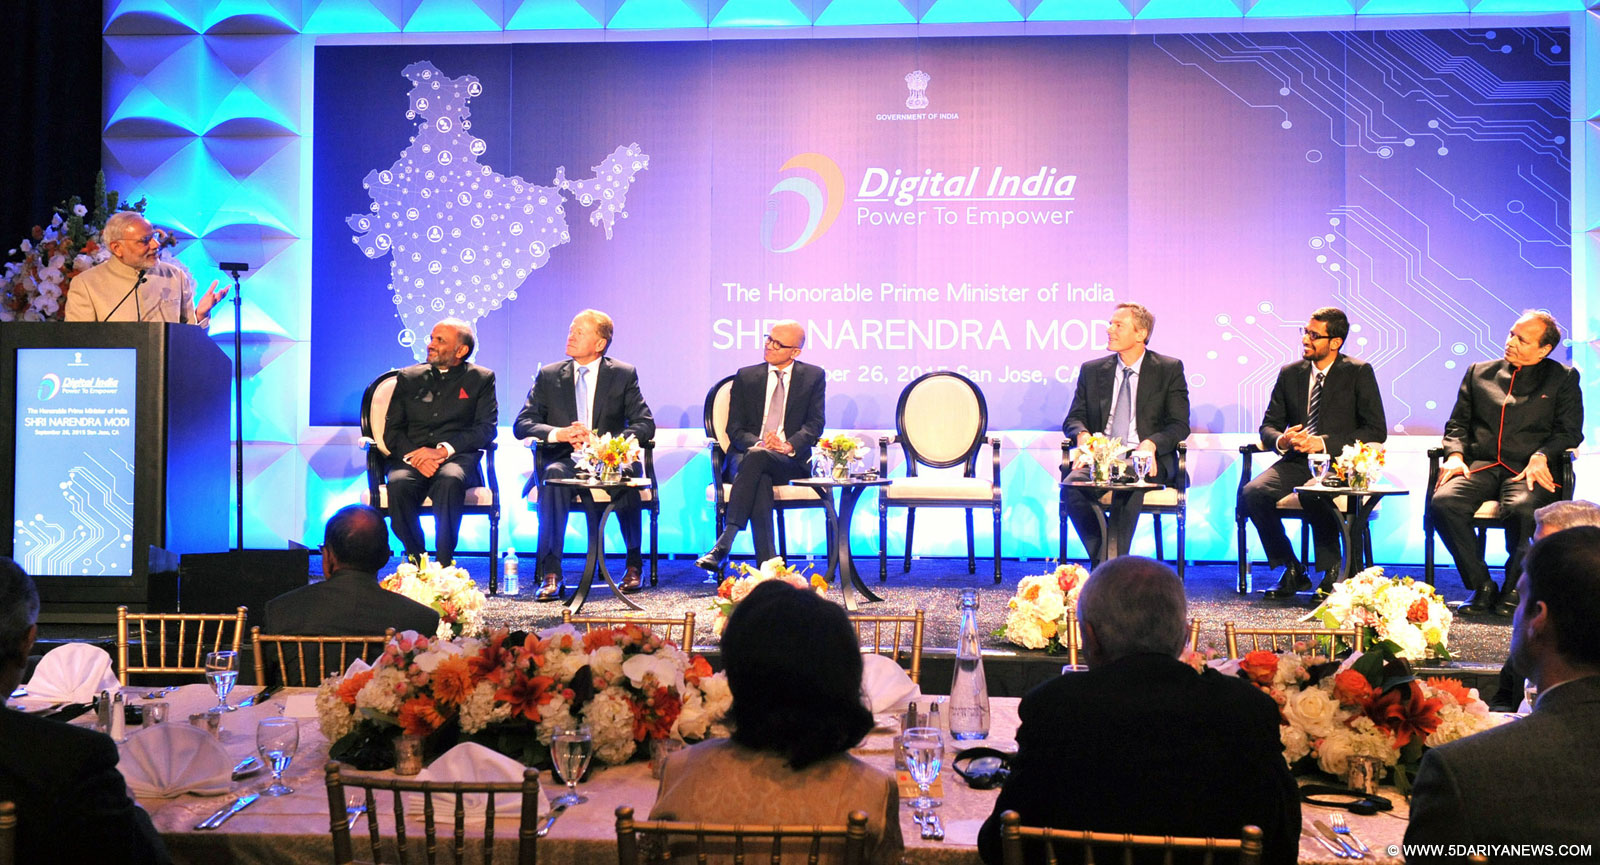 The Prime Minister, Shri Narendra Modi with Shri Satya Nadella, Shri Sundar Pichai and others, at the stage for Digital India Dinner, in San Jose, California on September 26, 2015.